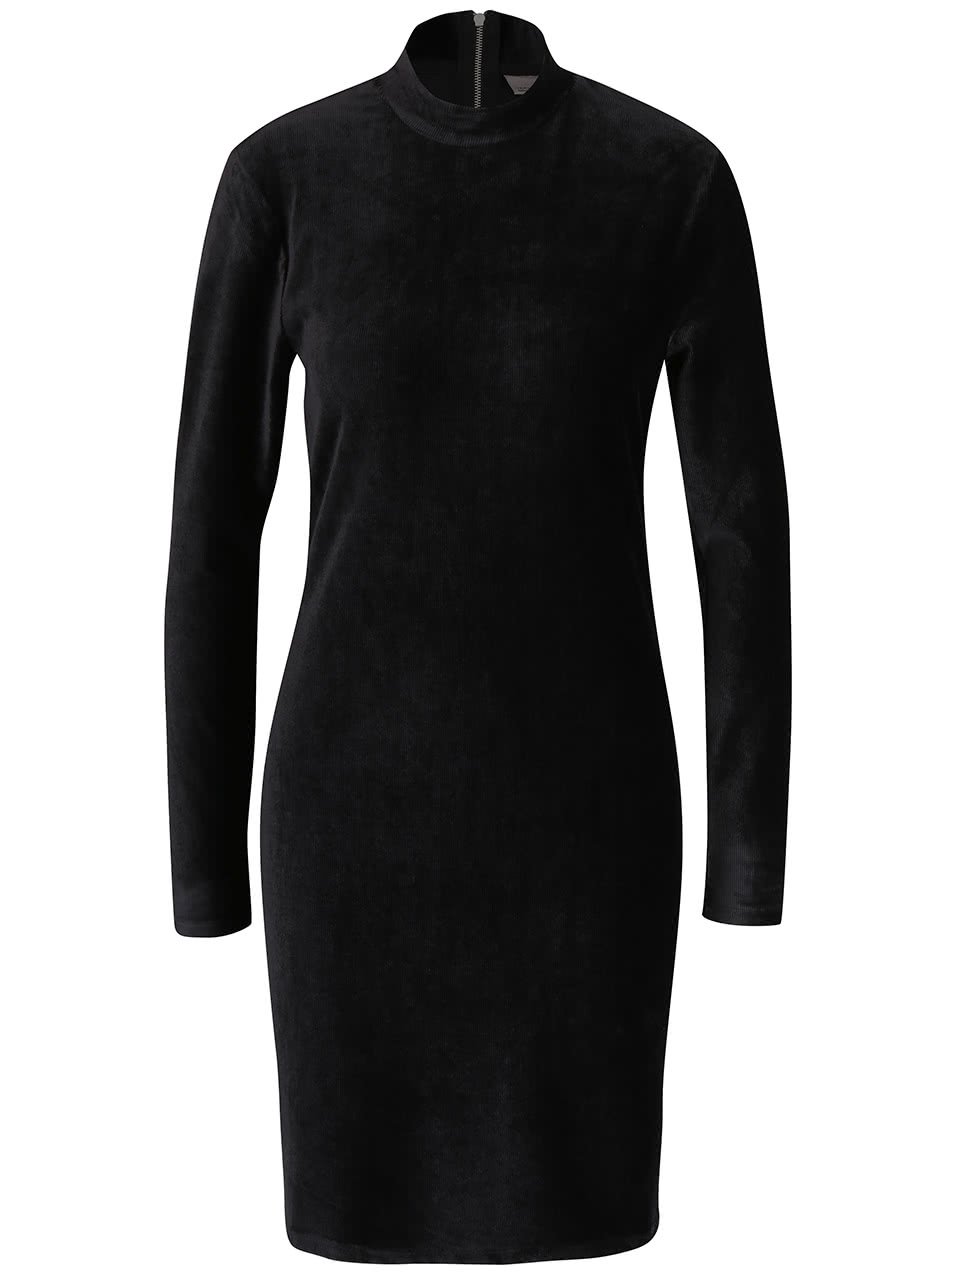 Černé sametové šaty ke krku s dlouhým rukávem Vero Moda Corduroy